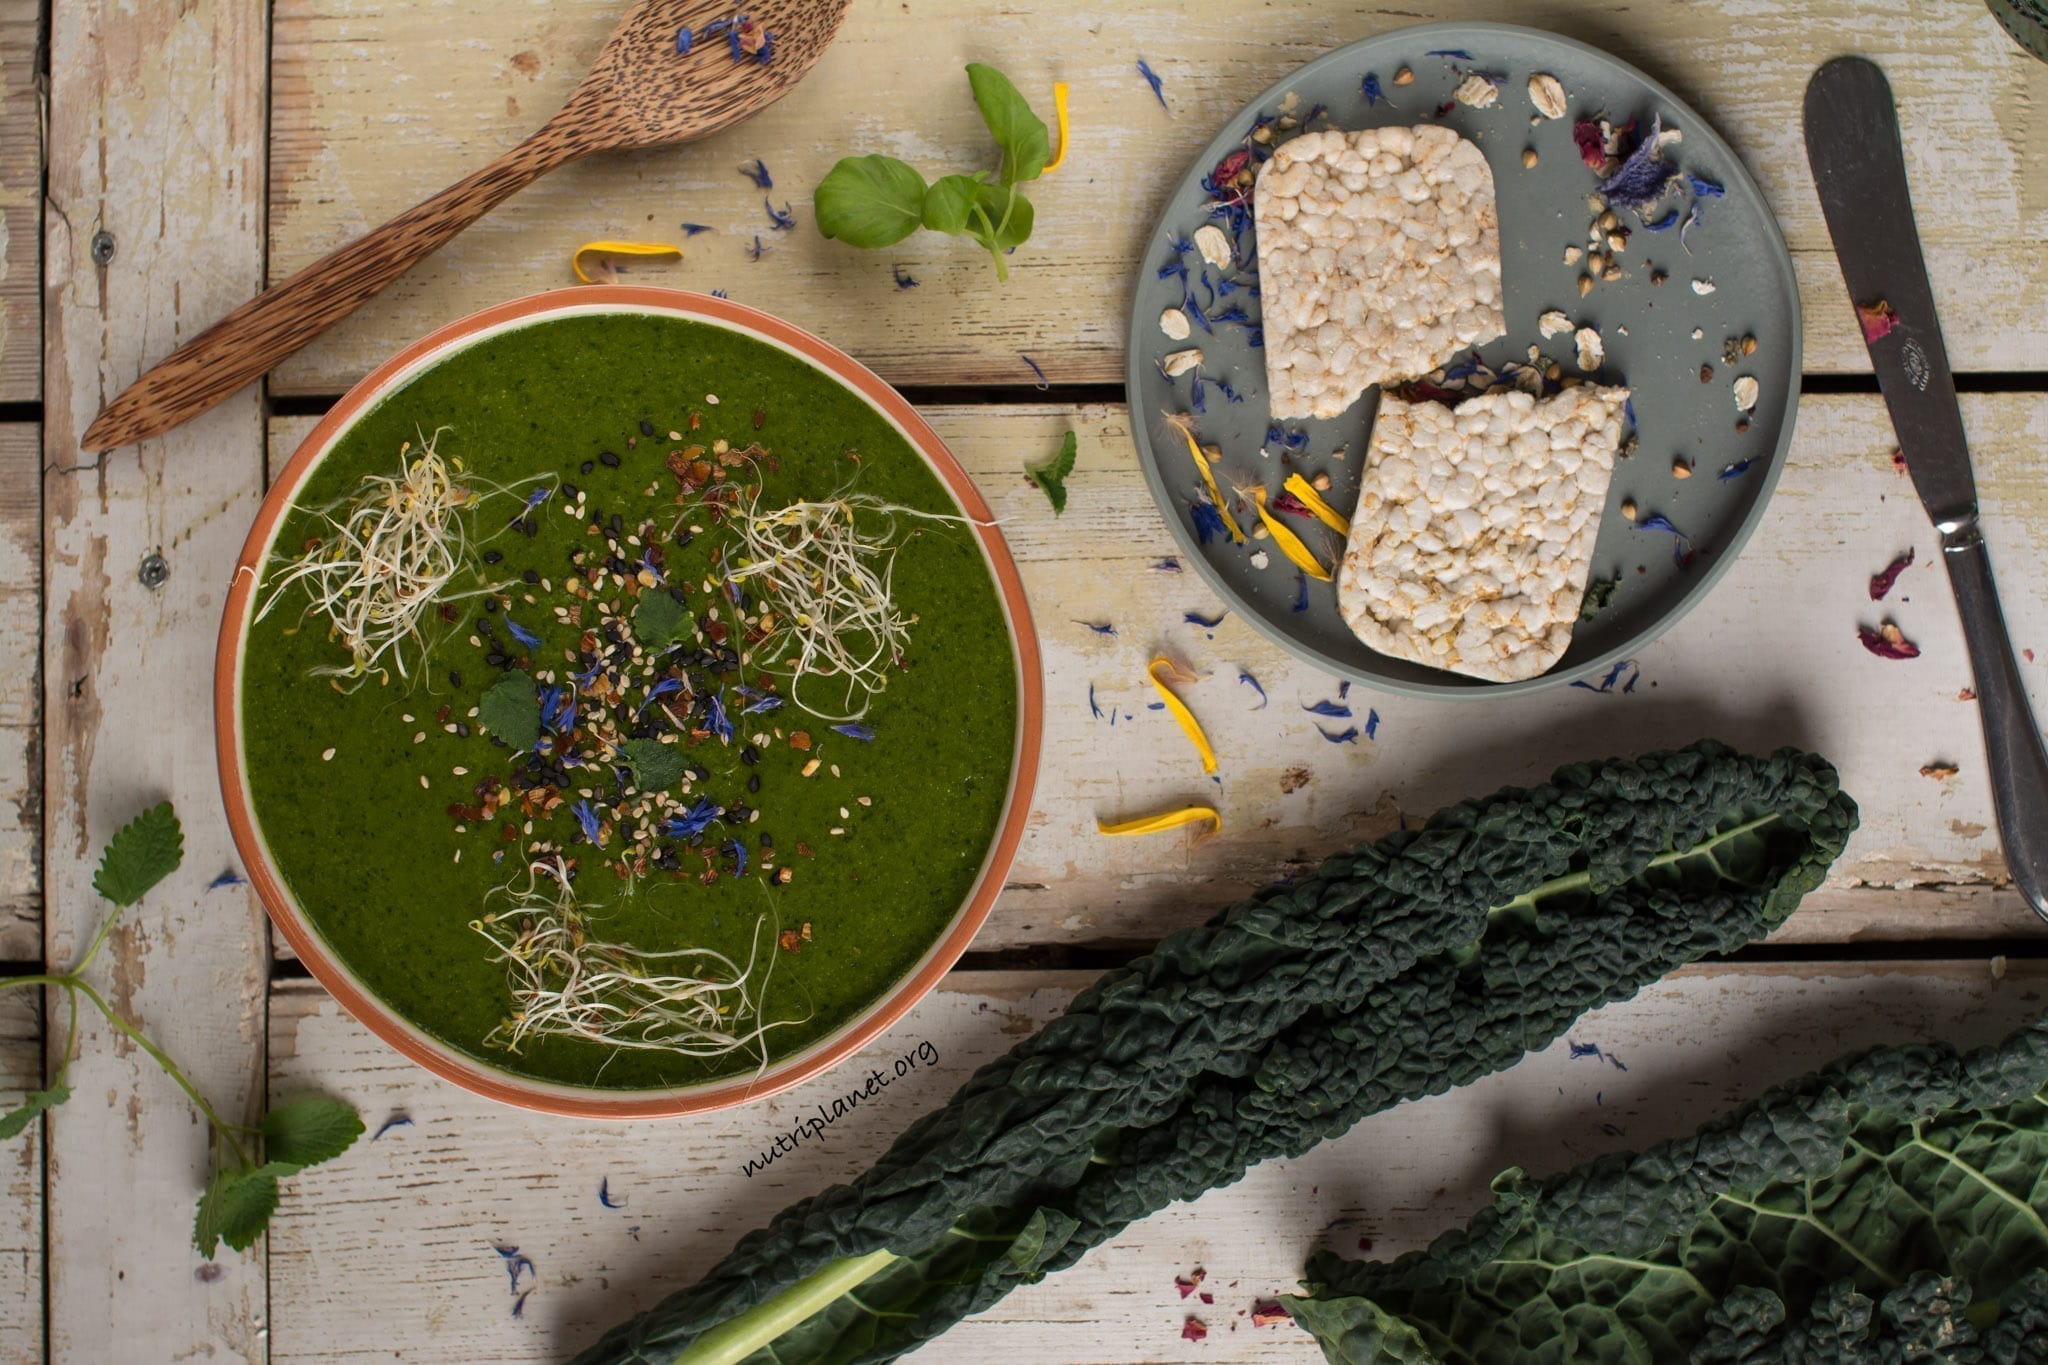 Creamy Vegan Soup with Peas, Broccoli and Kale